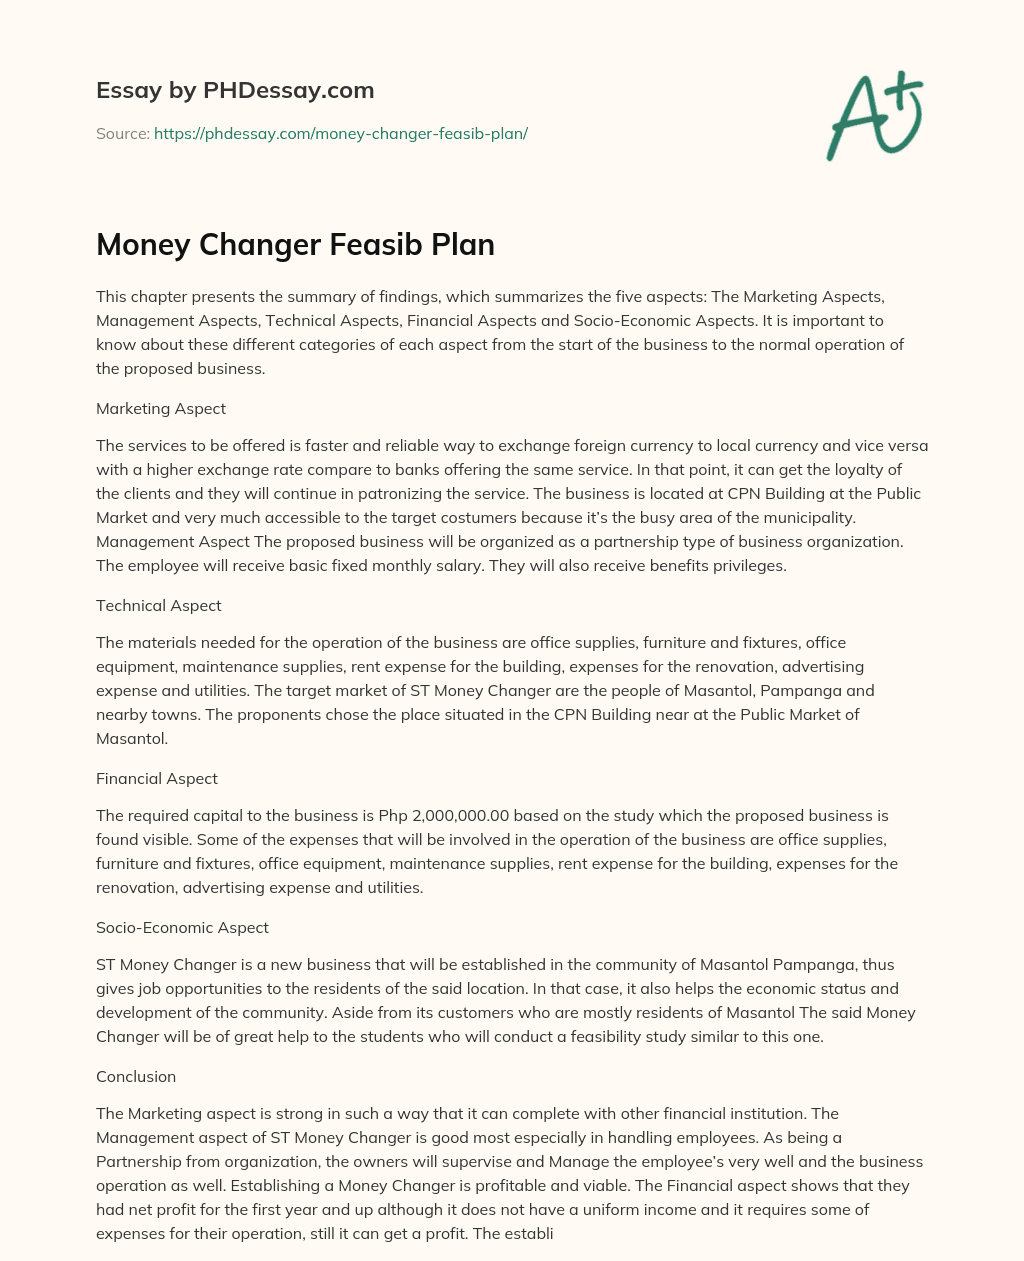 Money Changer Feasib Plan essay